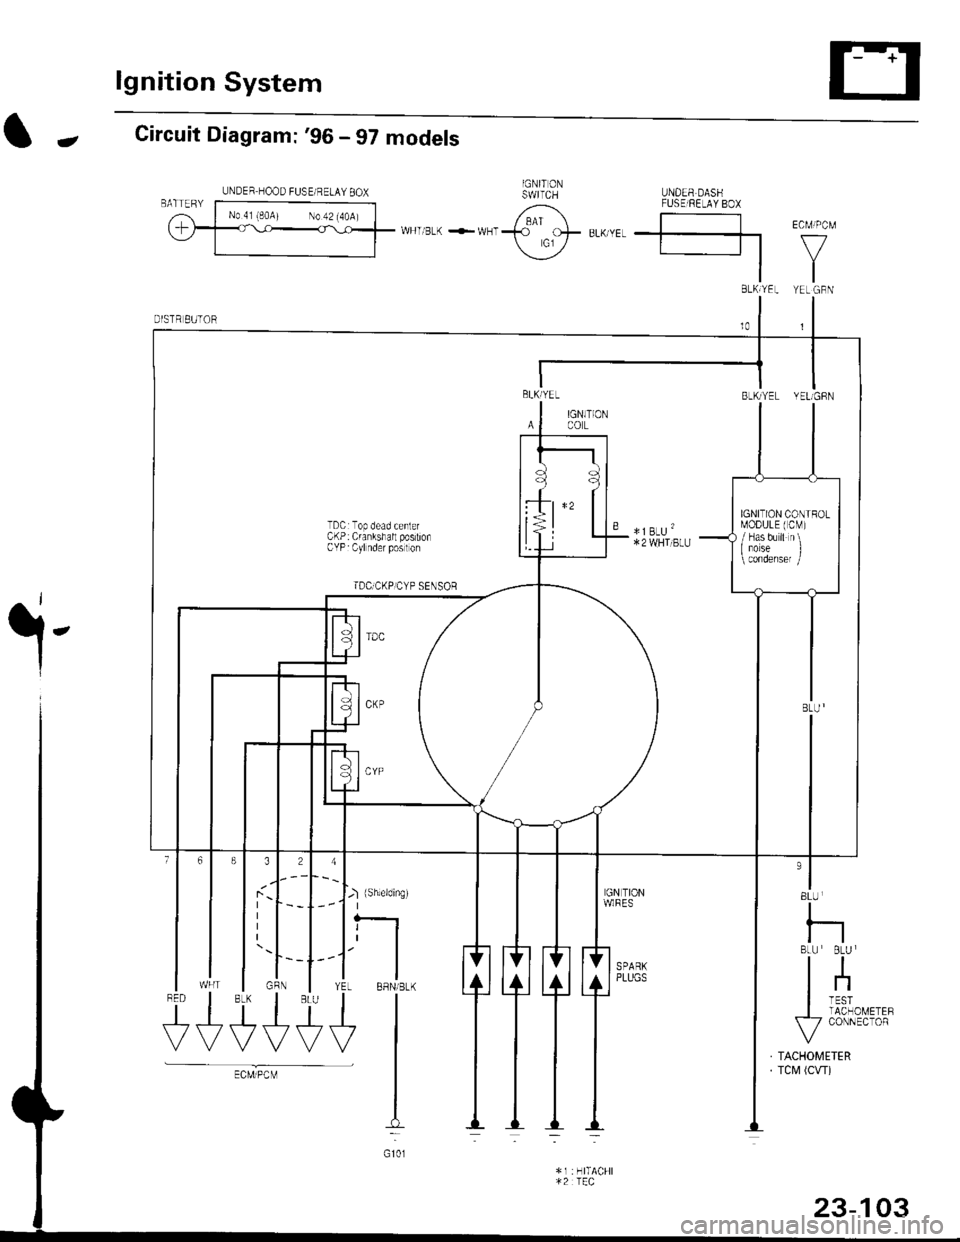 HONDA CIVIC 1997 6.G Workshop Manual lgnition System
-Circuit Diagram: 96 - 97 models
.i-
8LU
I
nBLU BLU I
tl
lnI TESTI TACHOMETEF\-7 CONNECTOR
TACHOMETERTCM (CW)
J-) {sh,eldinsrt I
tfYEL BBN/BLK
+l
I:
G101
$t+++
UNDER HOOD FUSE/ RELAY